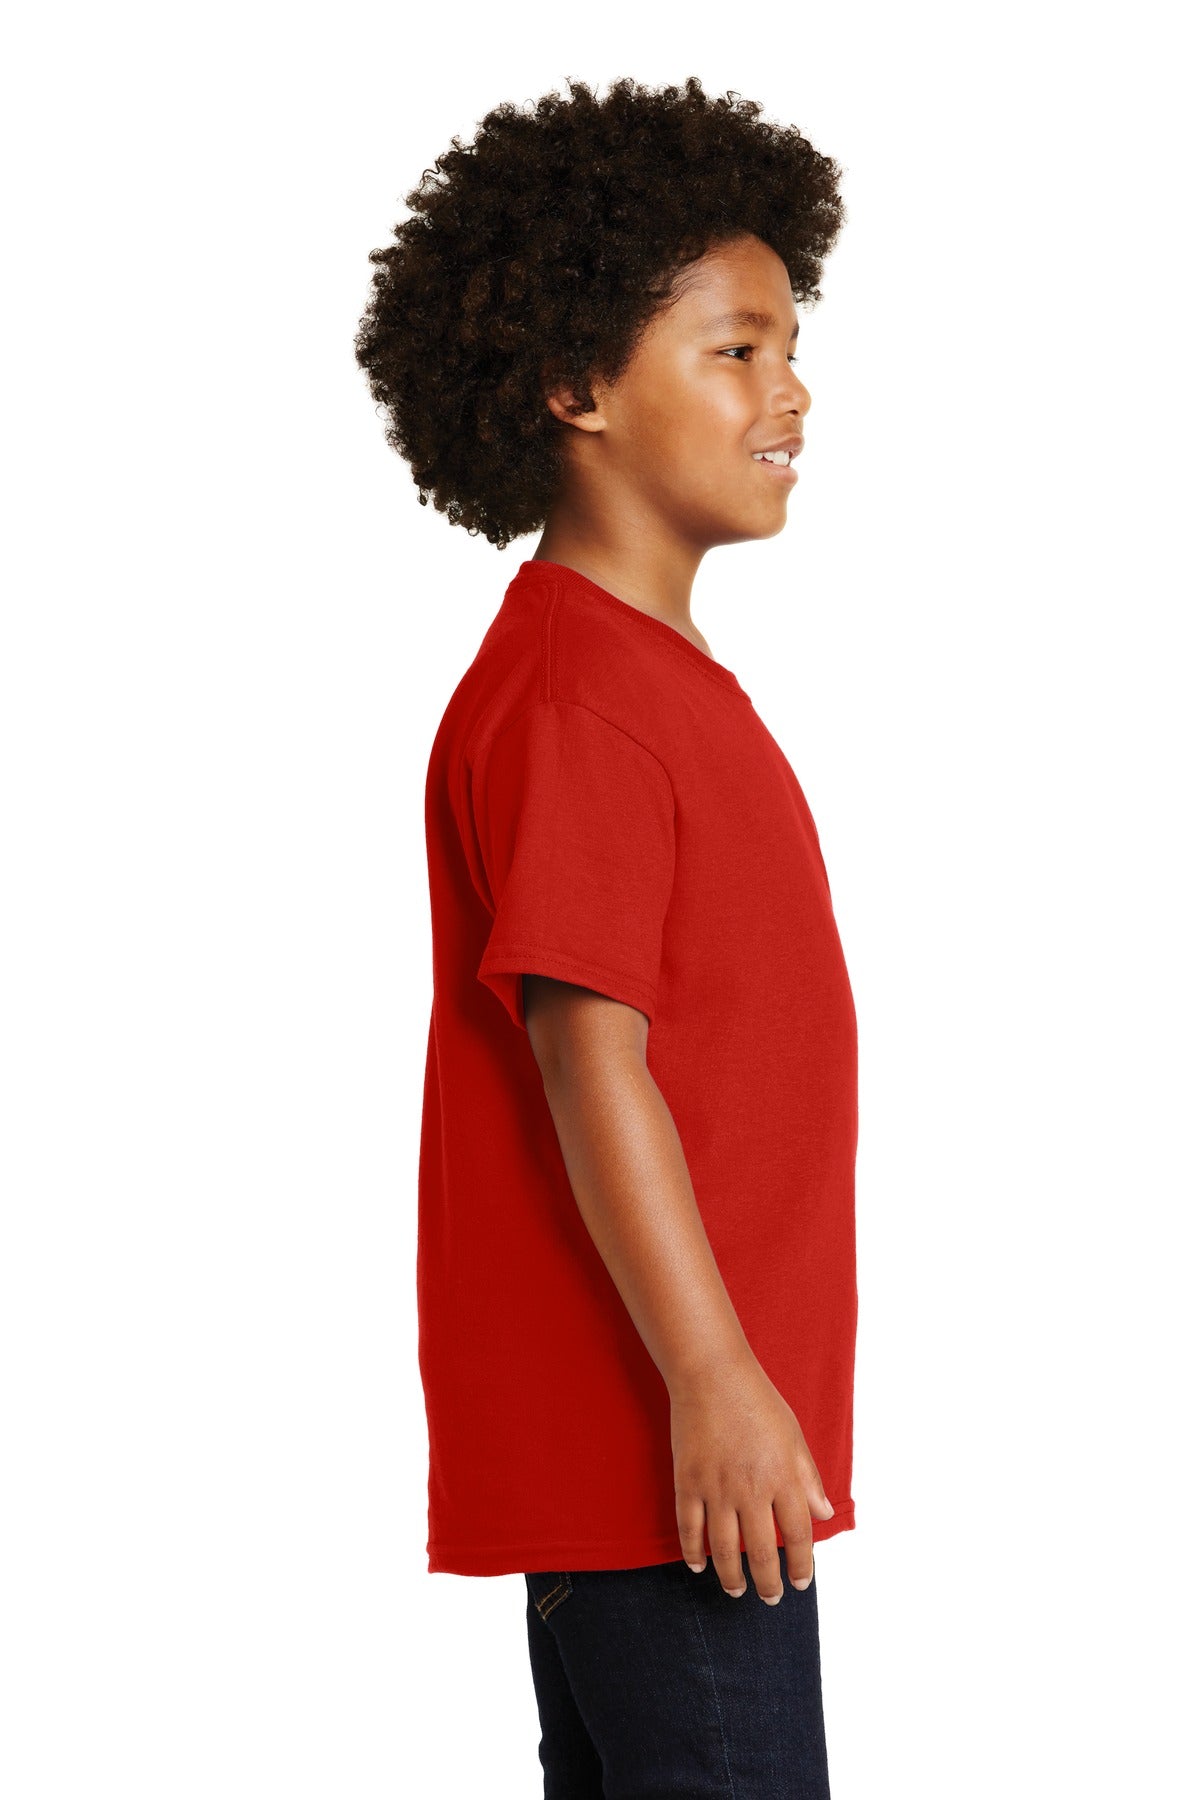 Gildan - Youth Ultra Cotton 100% US Cotton T-Shirt. 2000B - Red